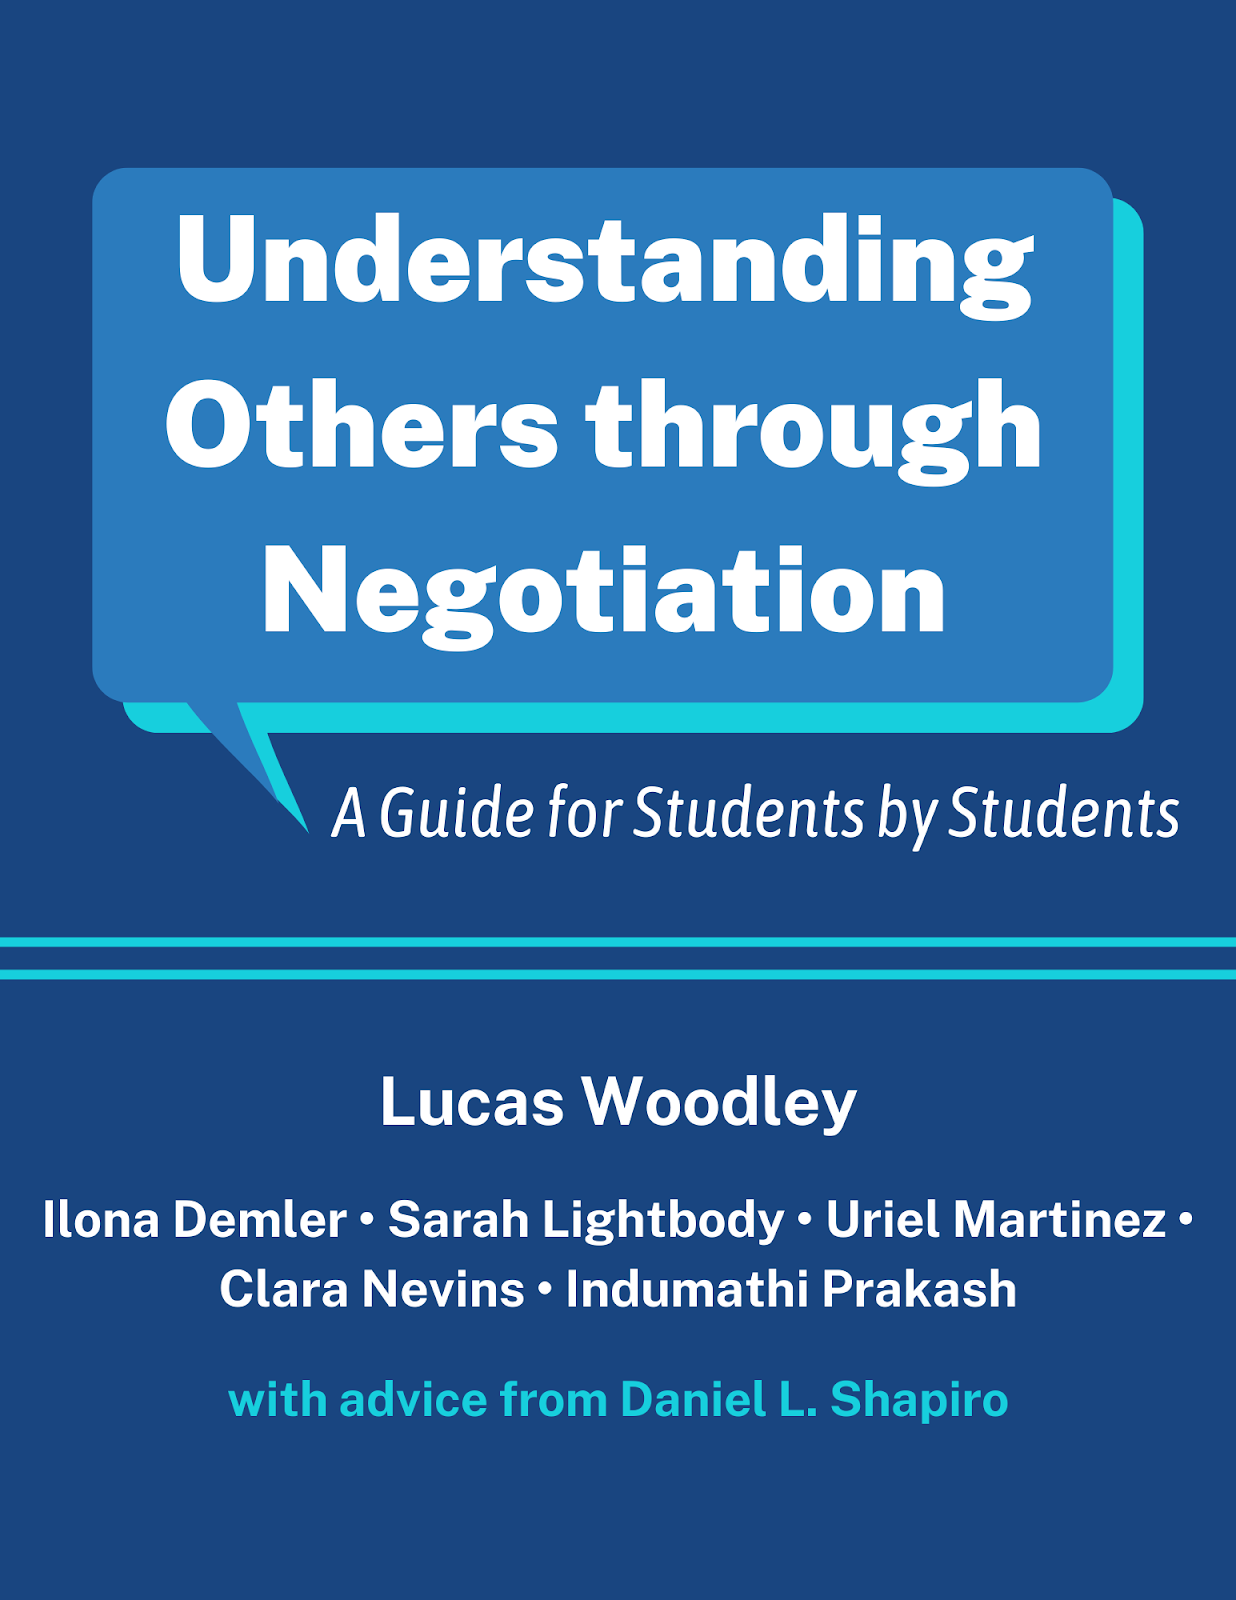  "Understanding Others through Negotiation.